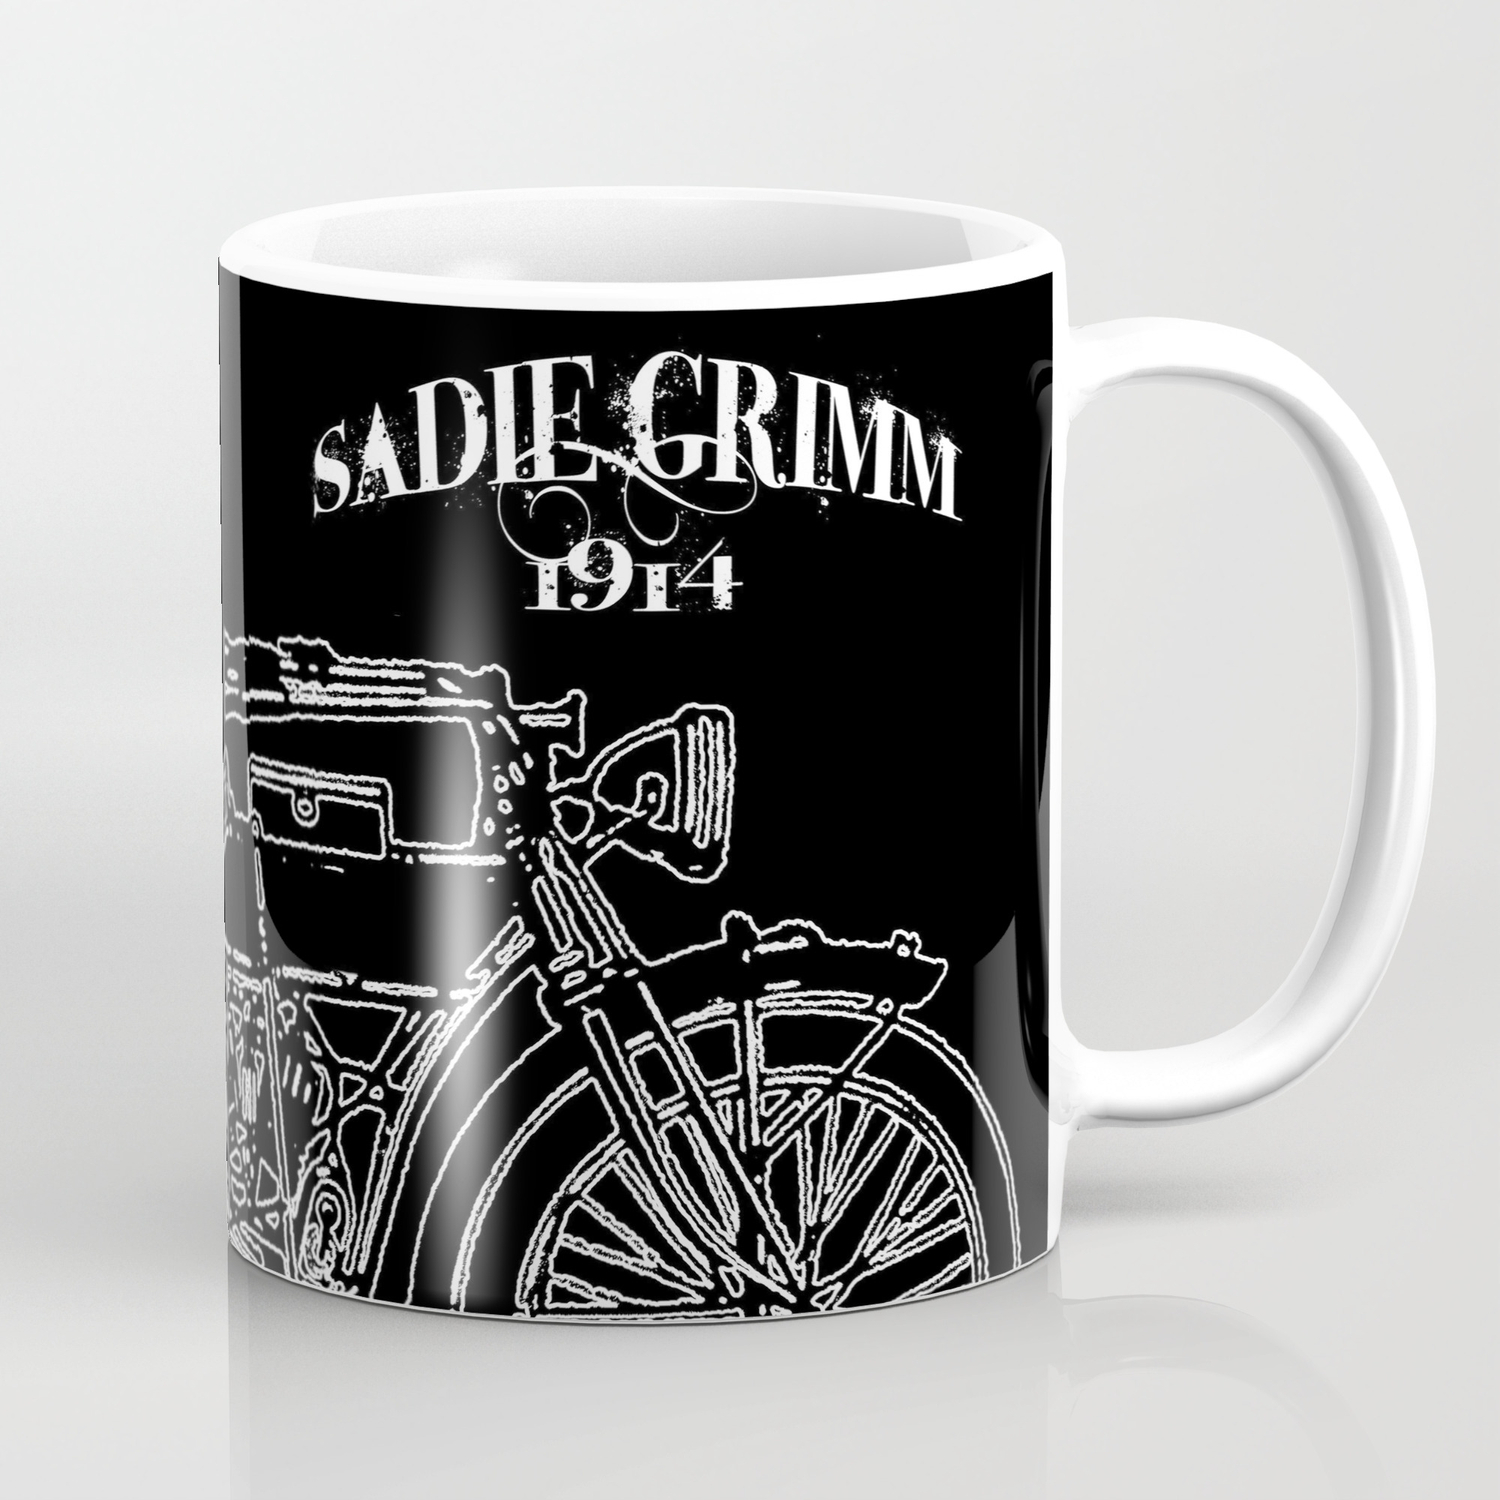 Sadie's Mug Name Mug and Coaster Set 